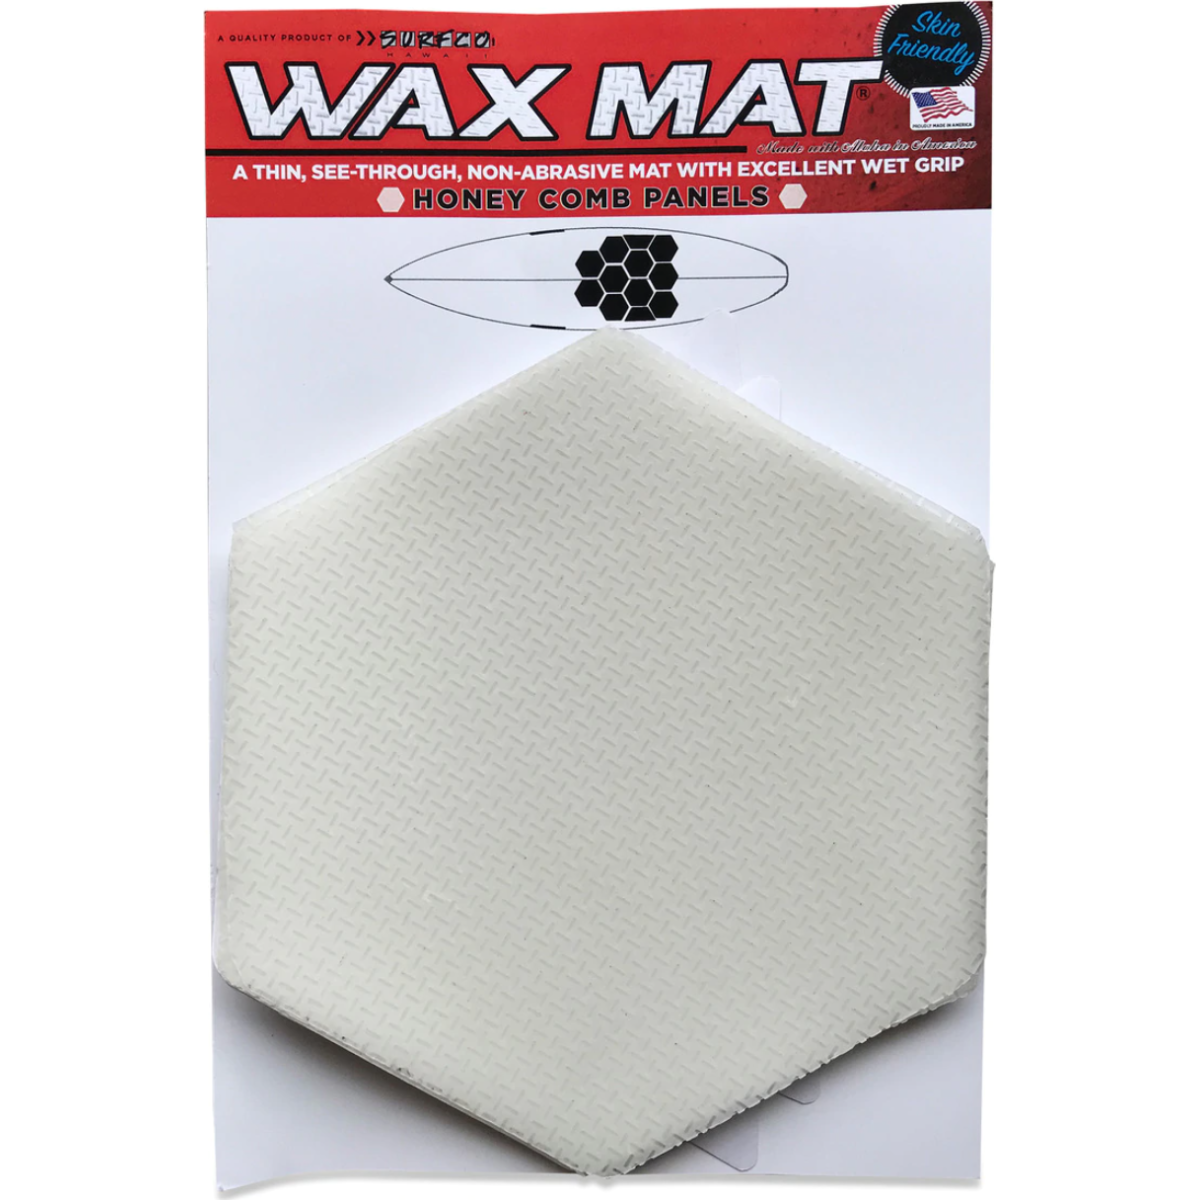 Honeycomb Wax Mat Kit.